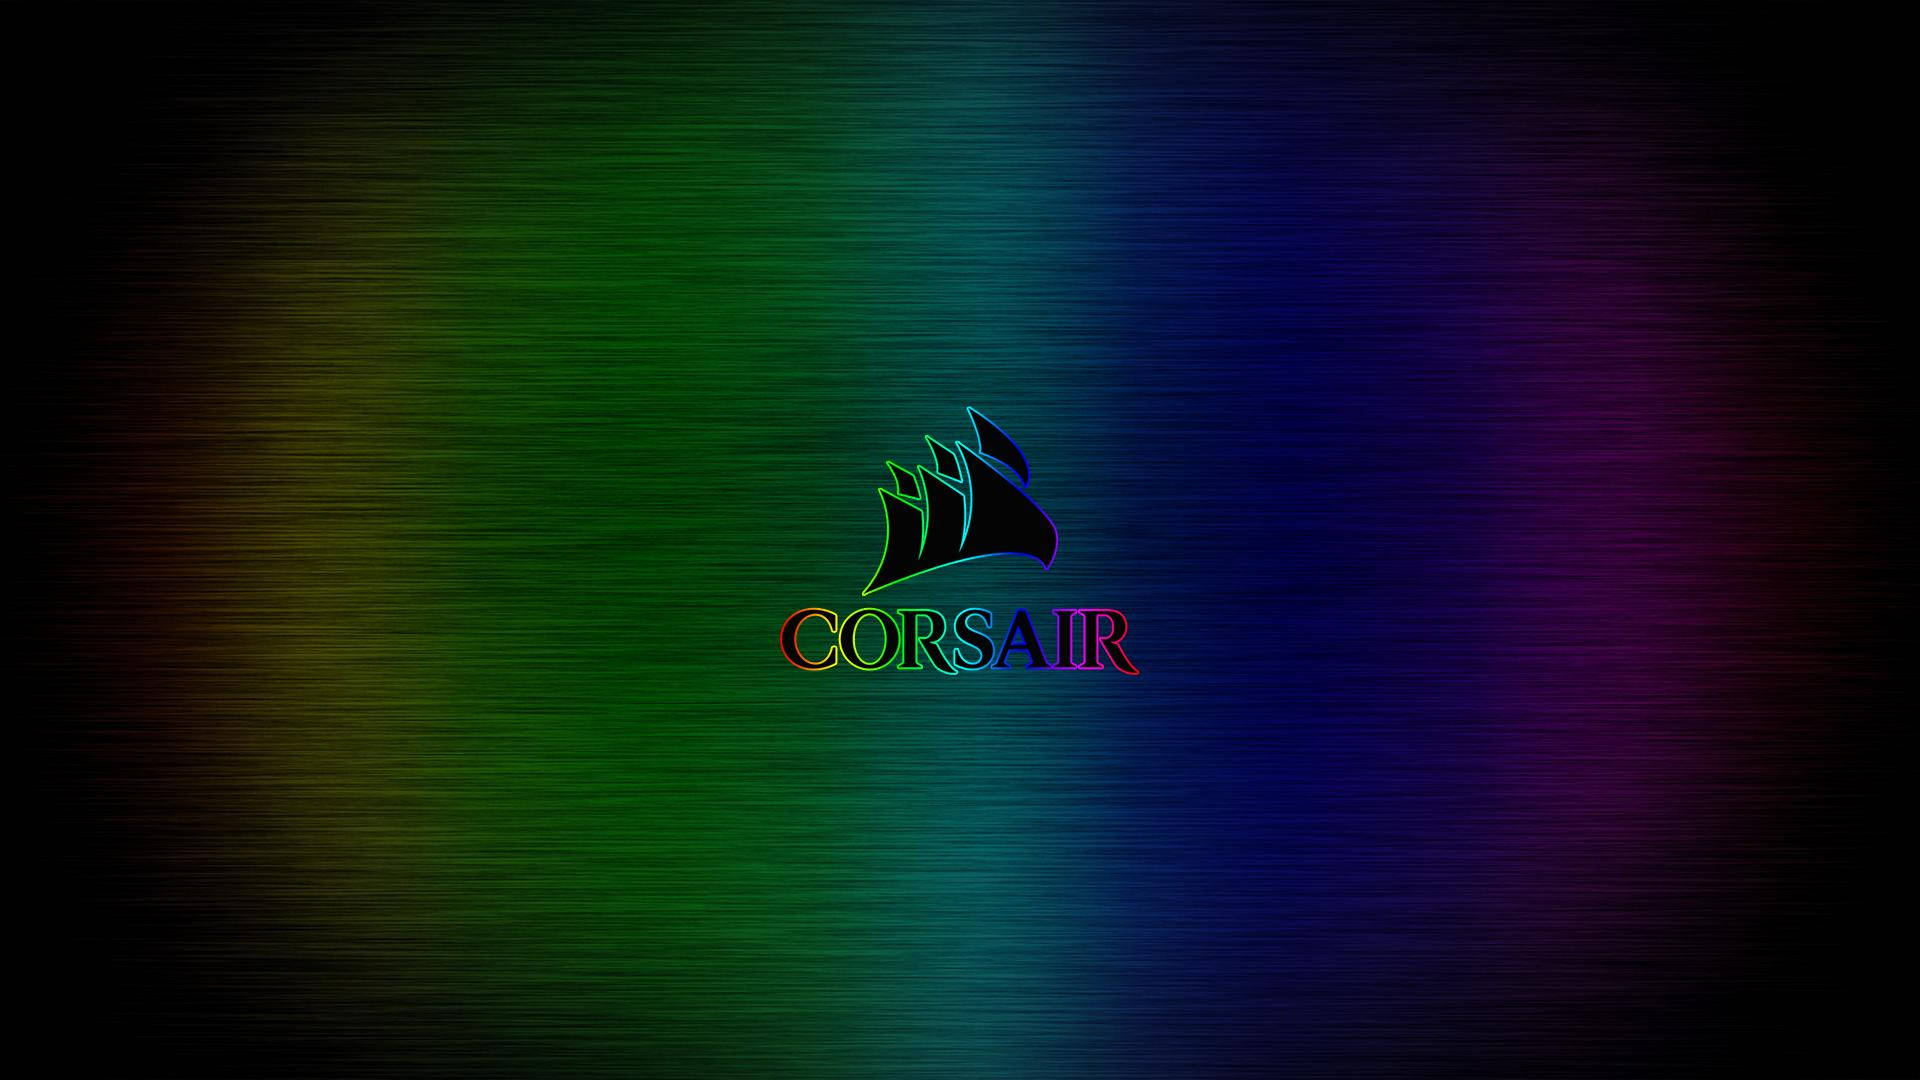 Corsair On Rainbow Metal Background